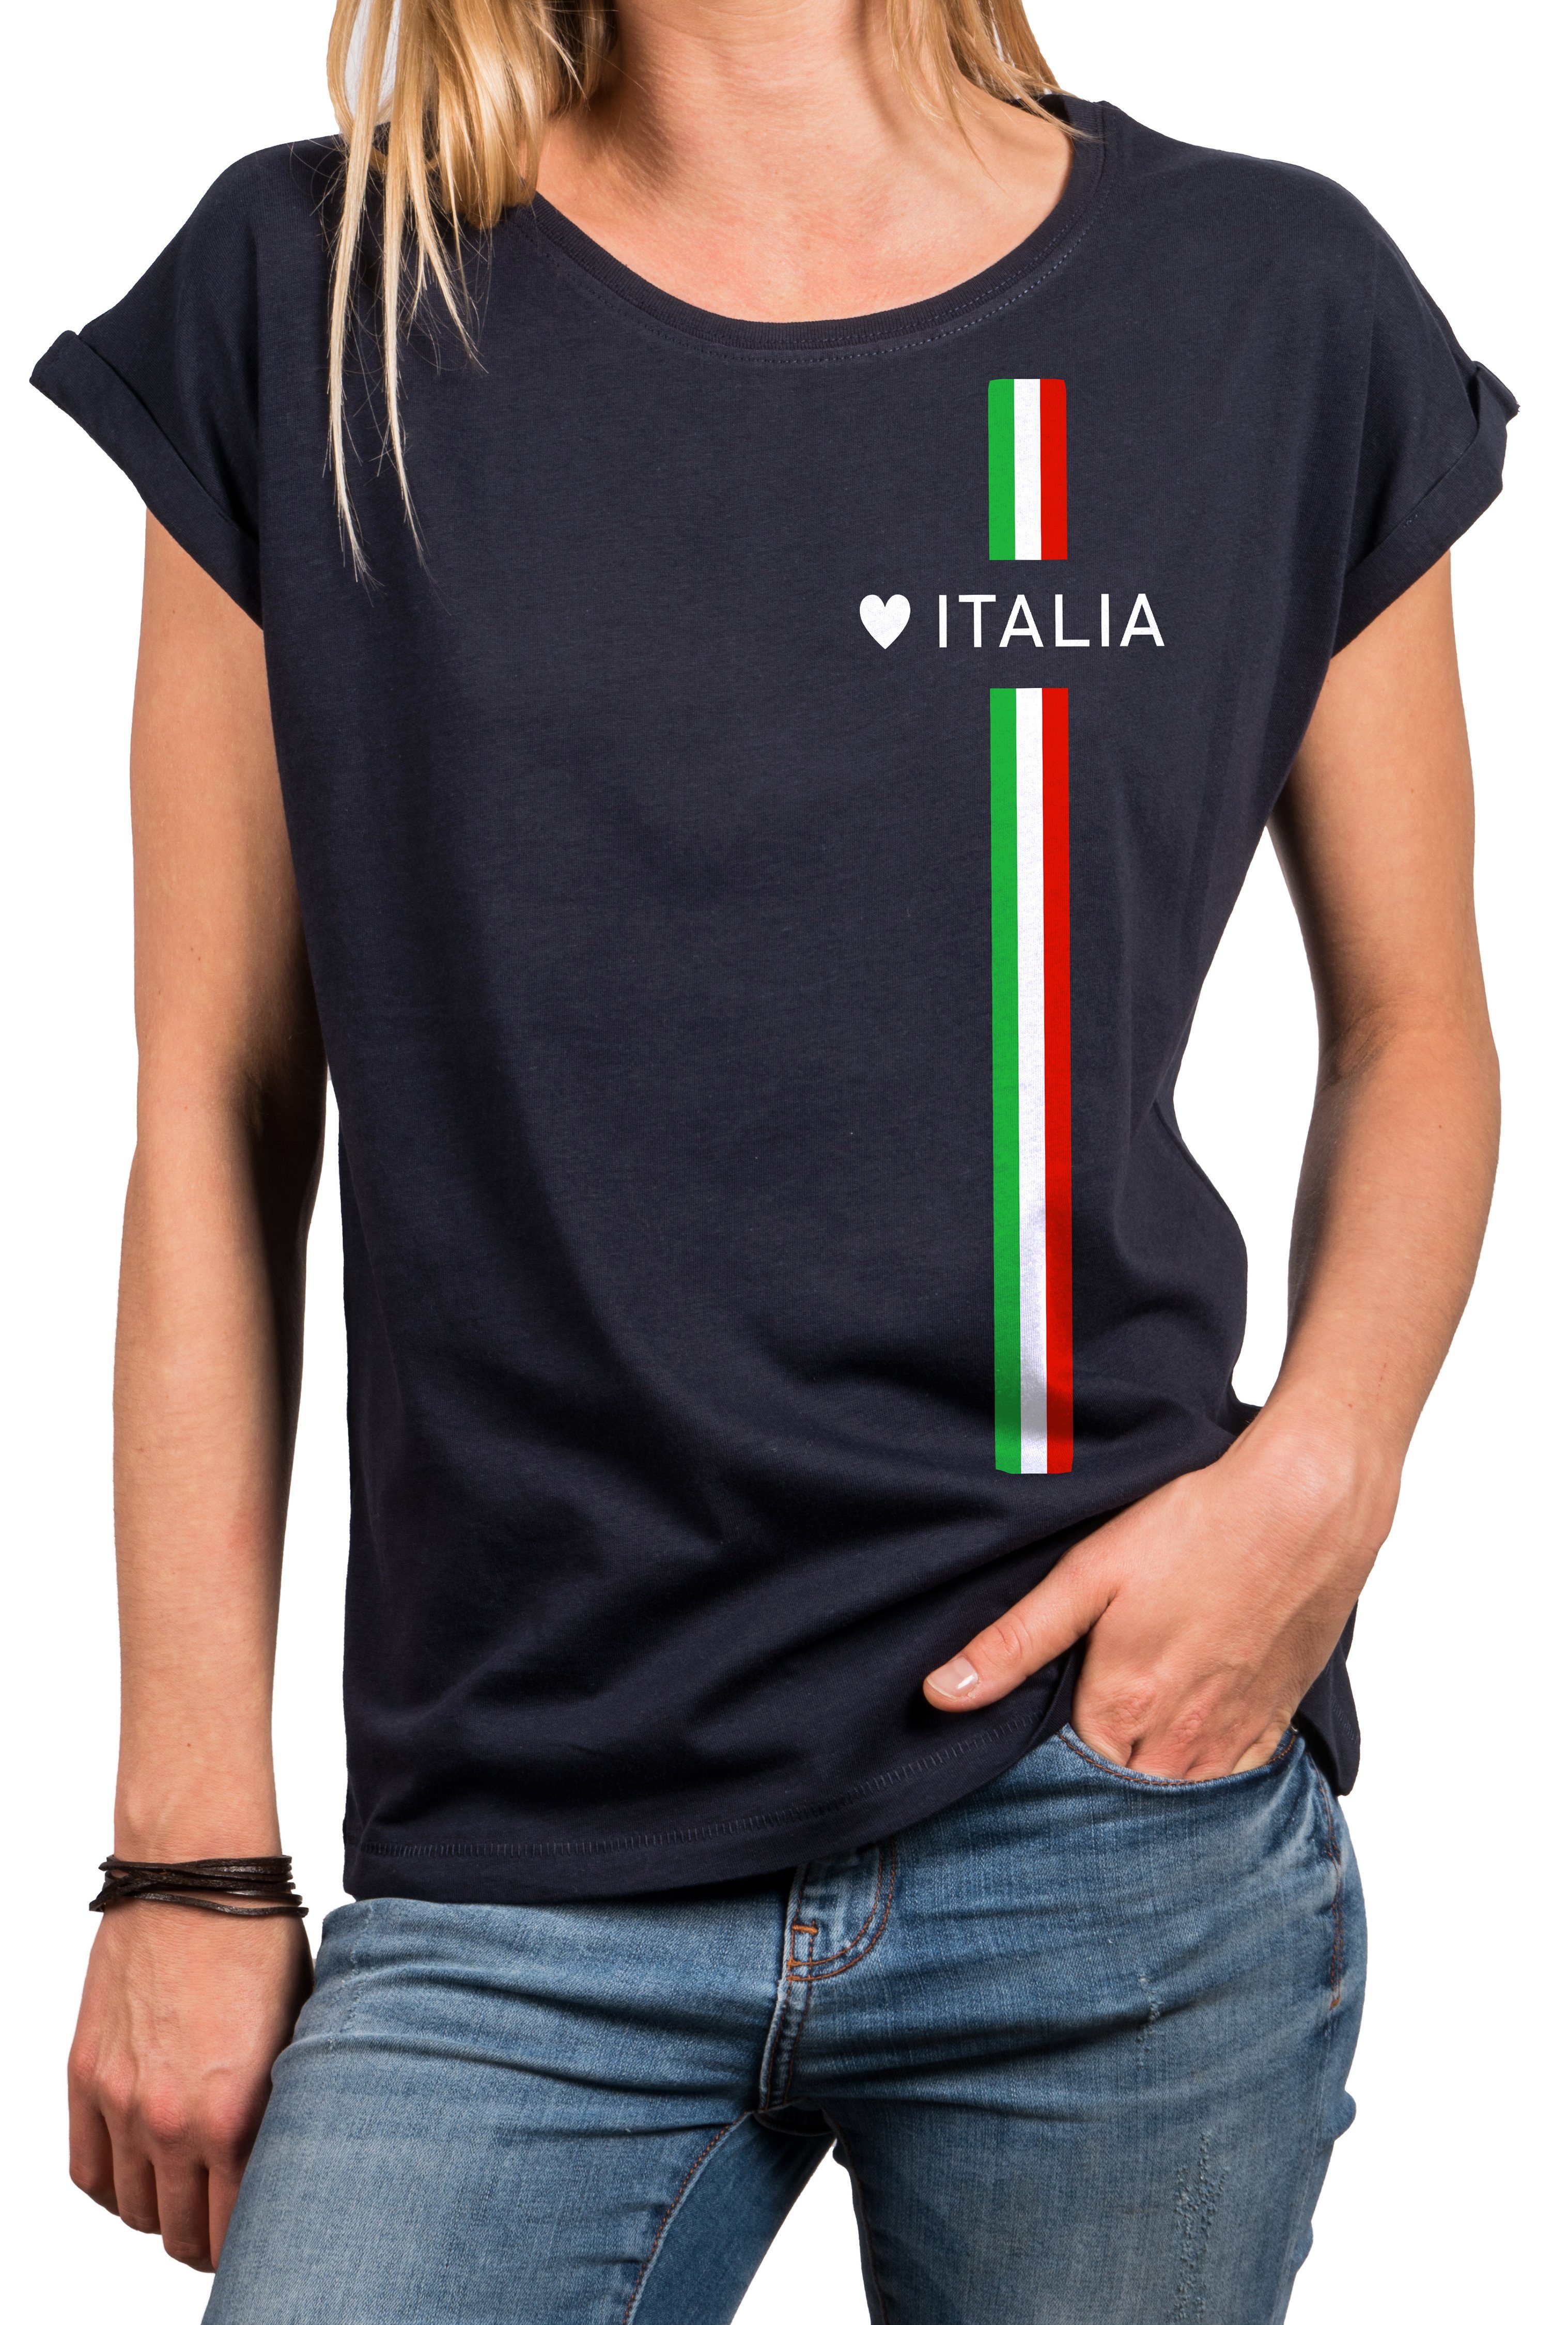 Mode Druck Italien Italiano Italienische mit Damen Style Top Trikot Italia Blau Print-Shirt MAKAYA Herz Kurzarmshirt,